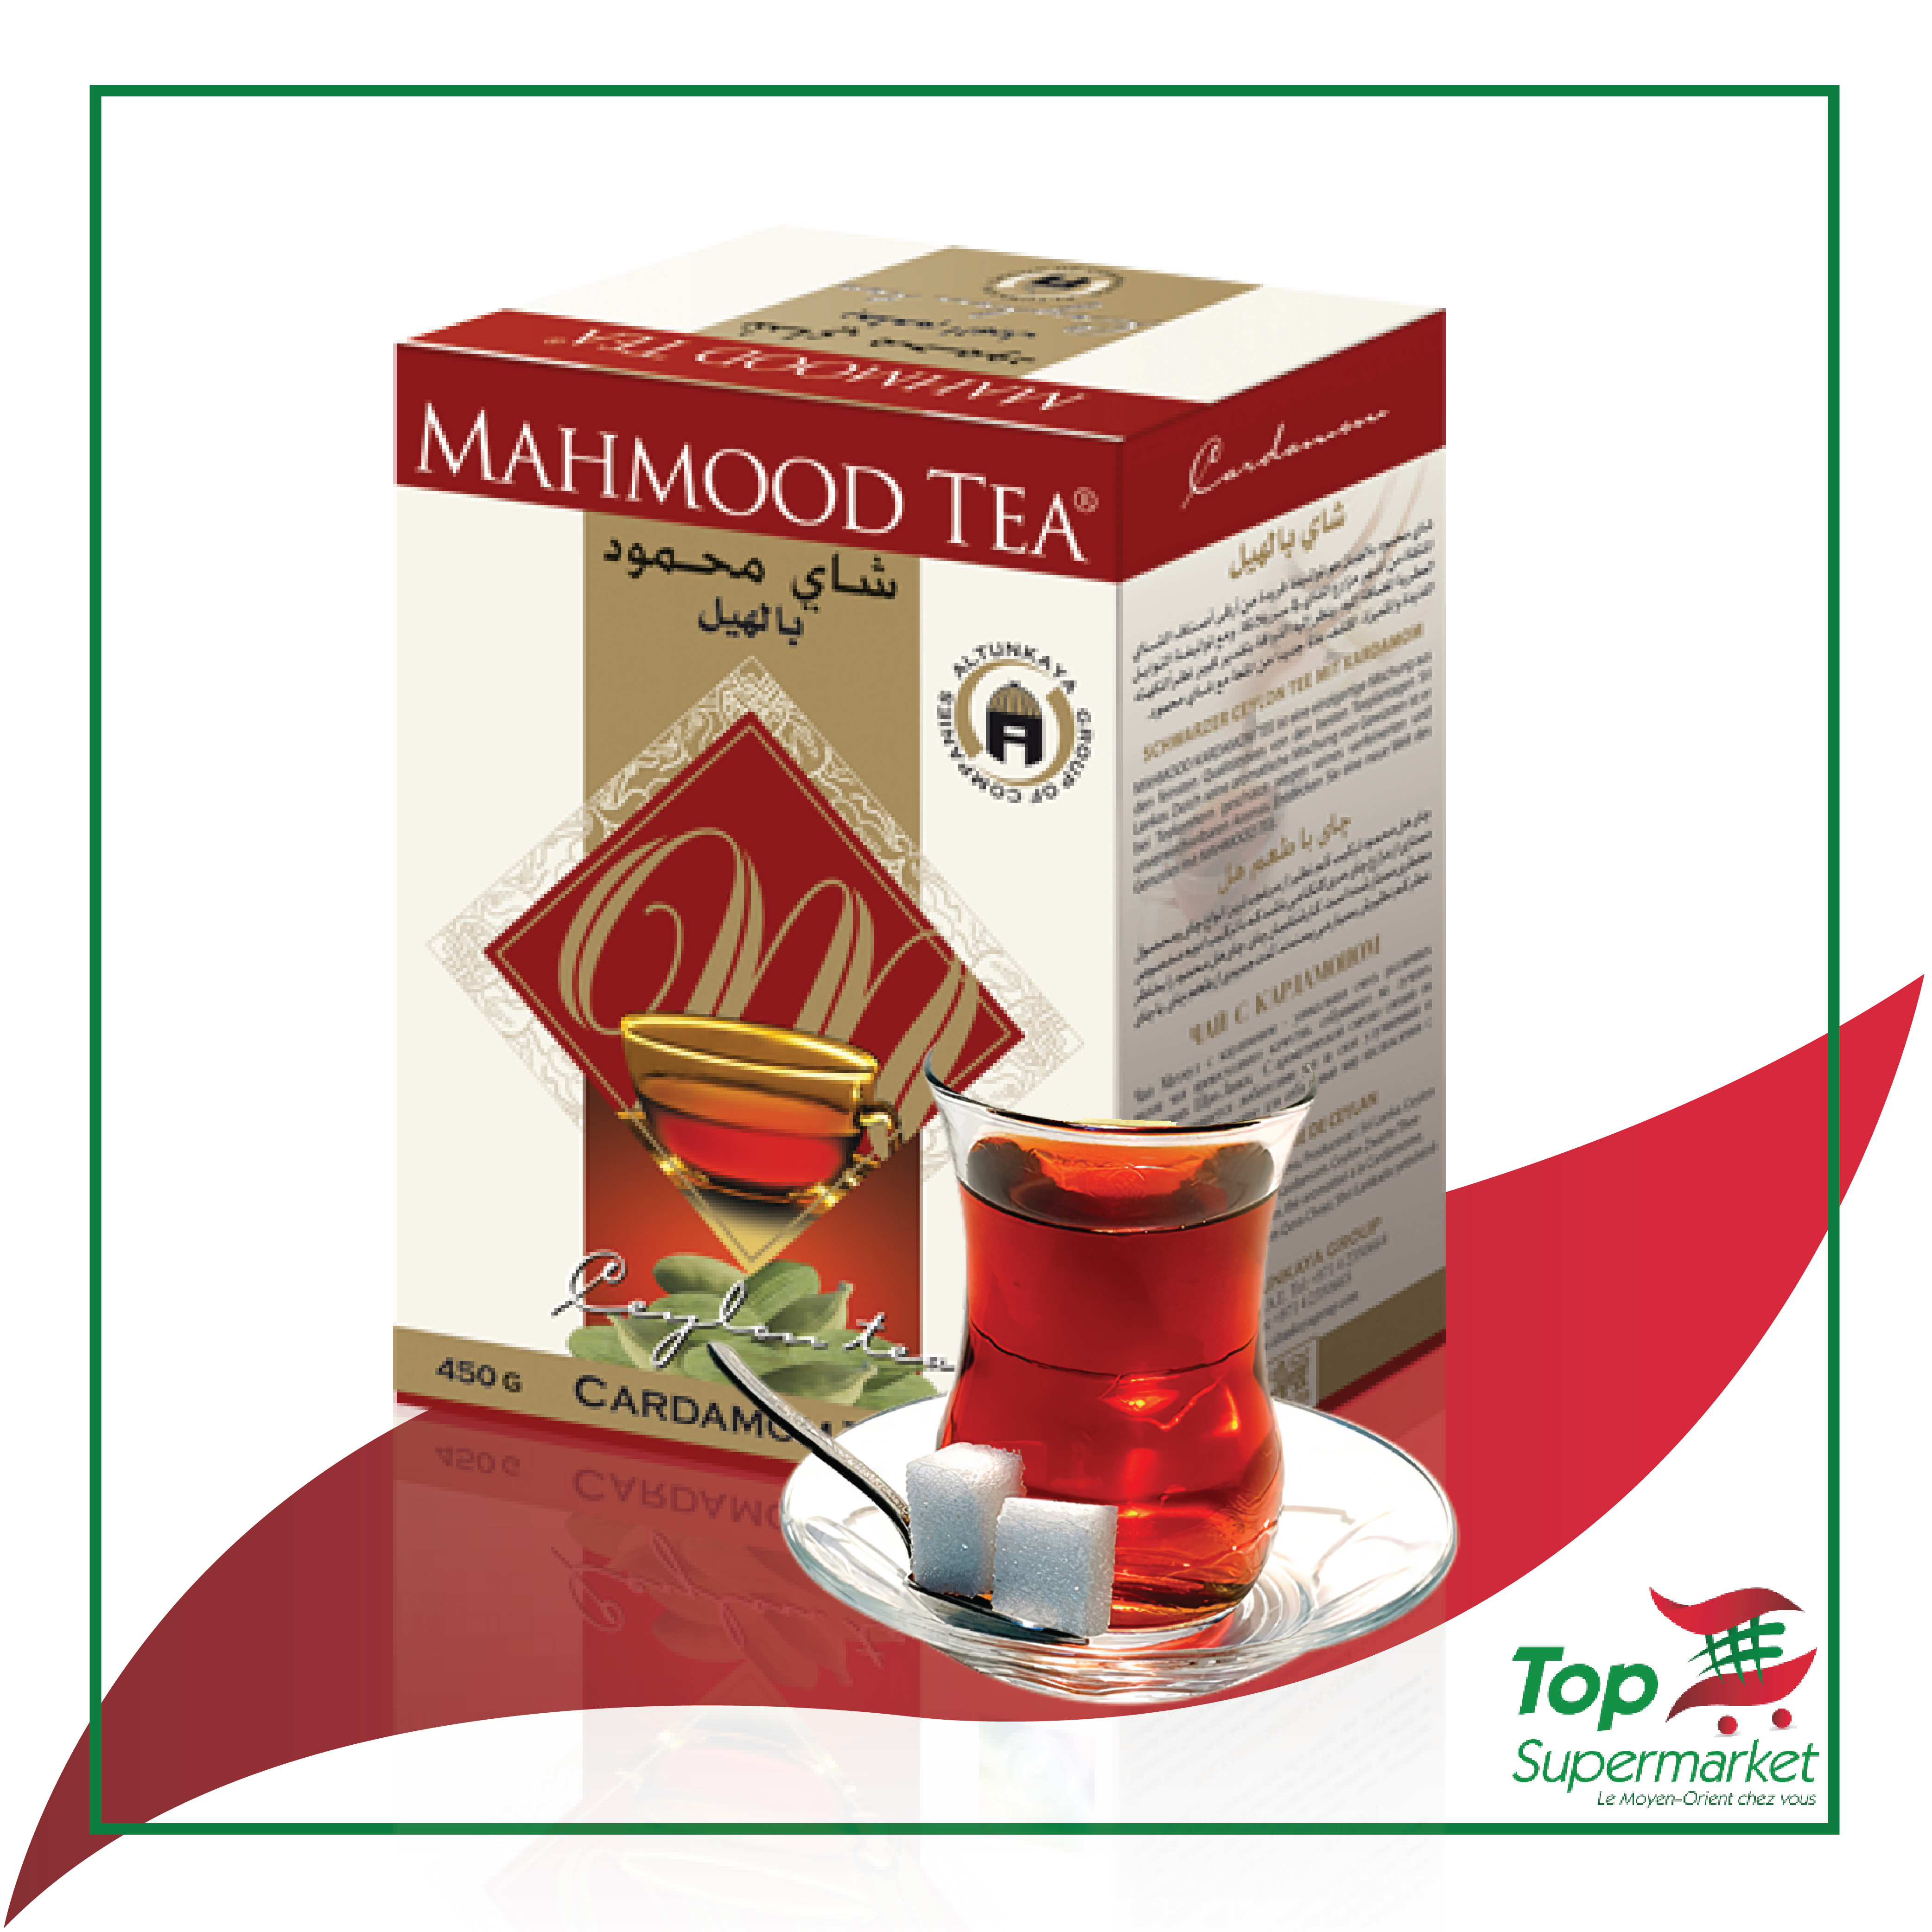 Mahmood Tea Cardamom450g